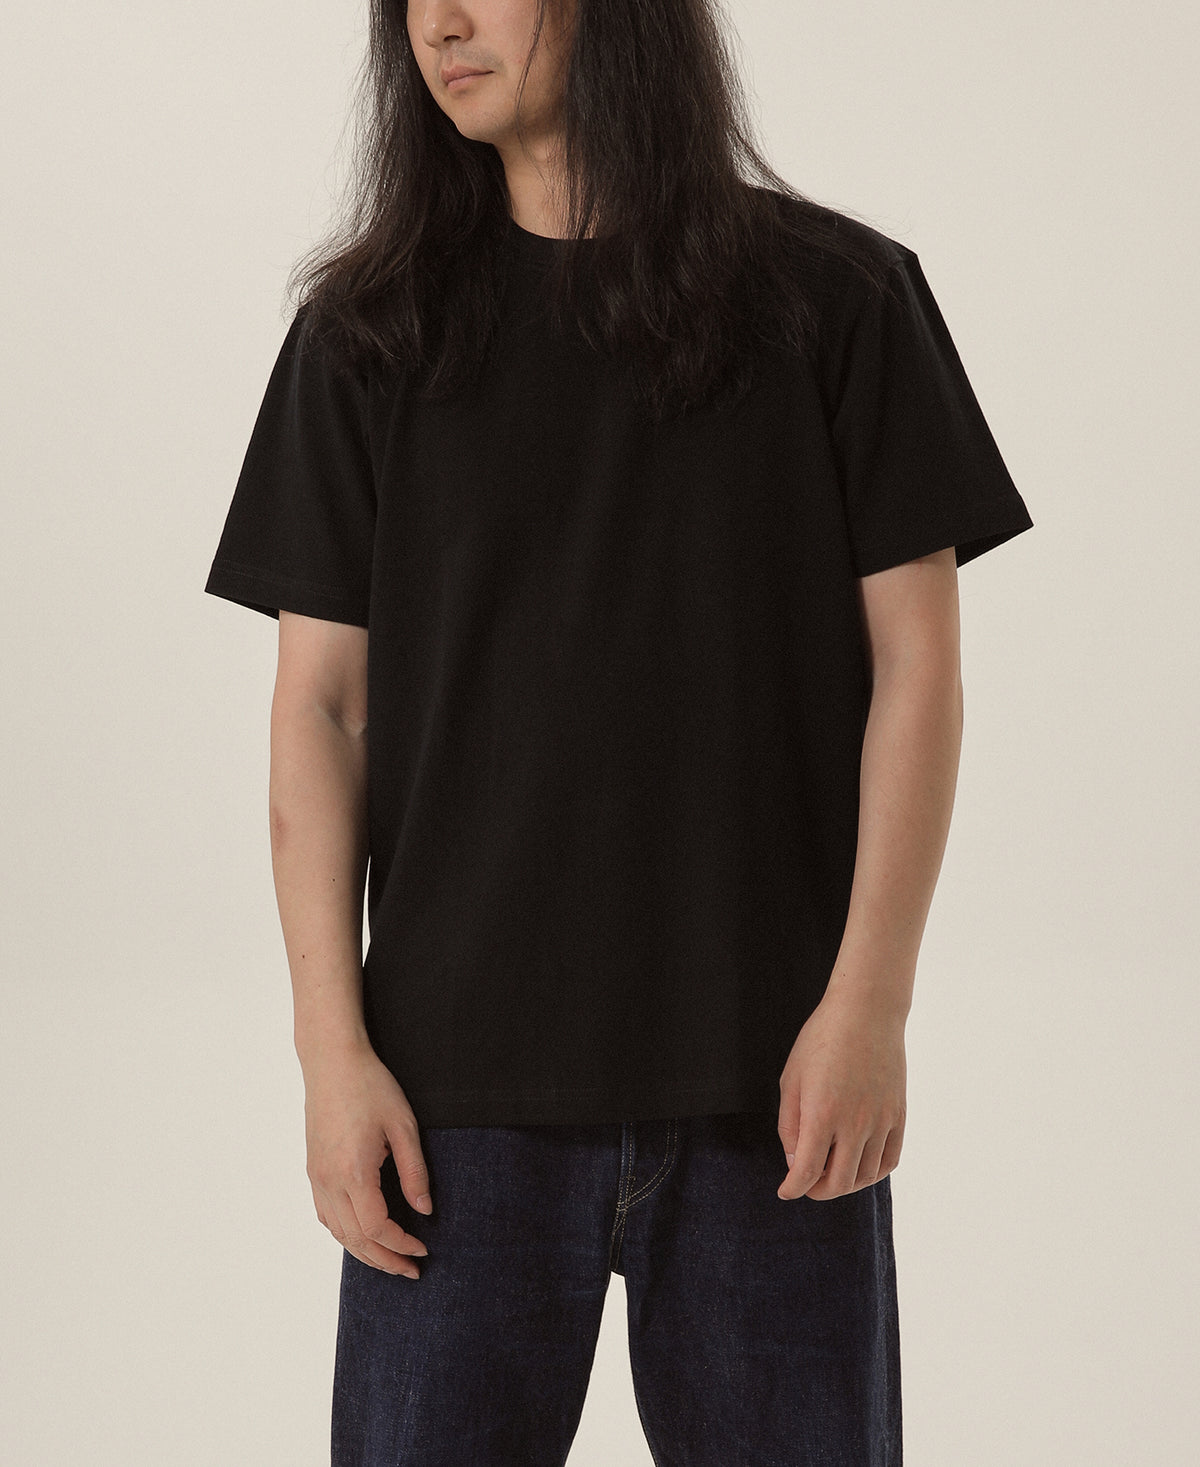 9 oz US Cotton Tubular T-Shirt - Black